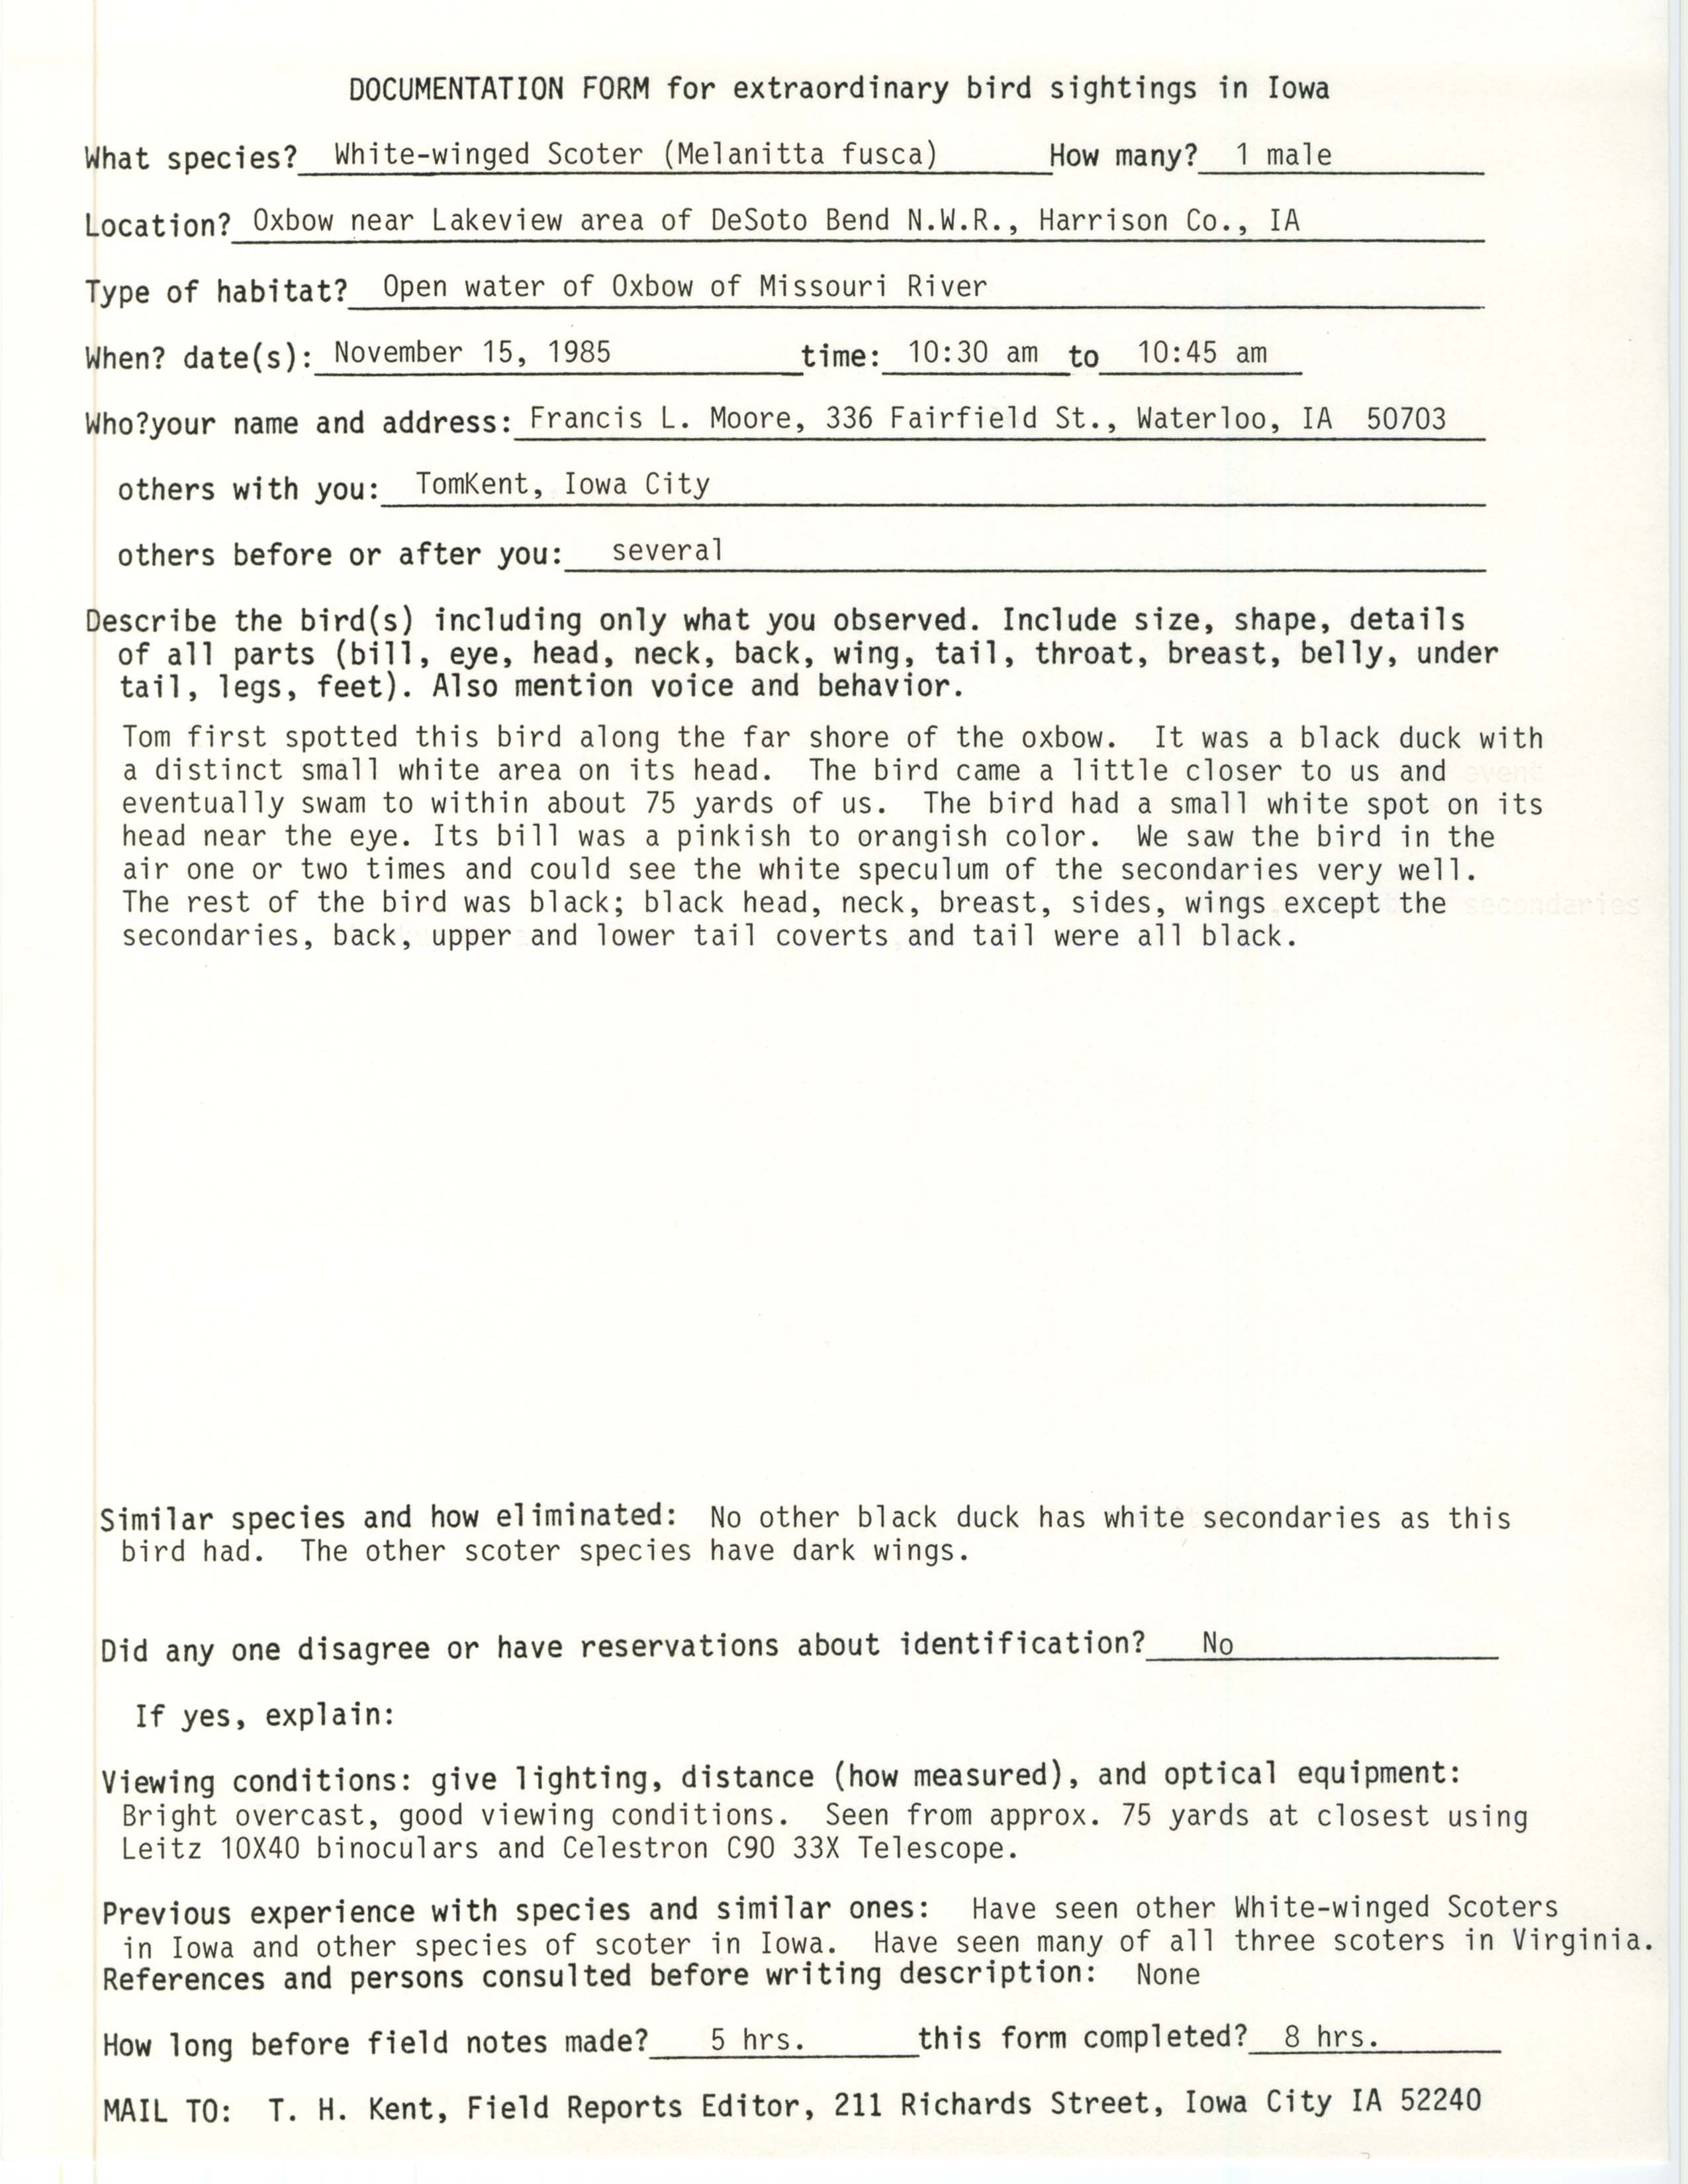 Rare bird documentation form for White-winged Scoter at DeSoto Bend National Wildlife Refuge, 1985